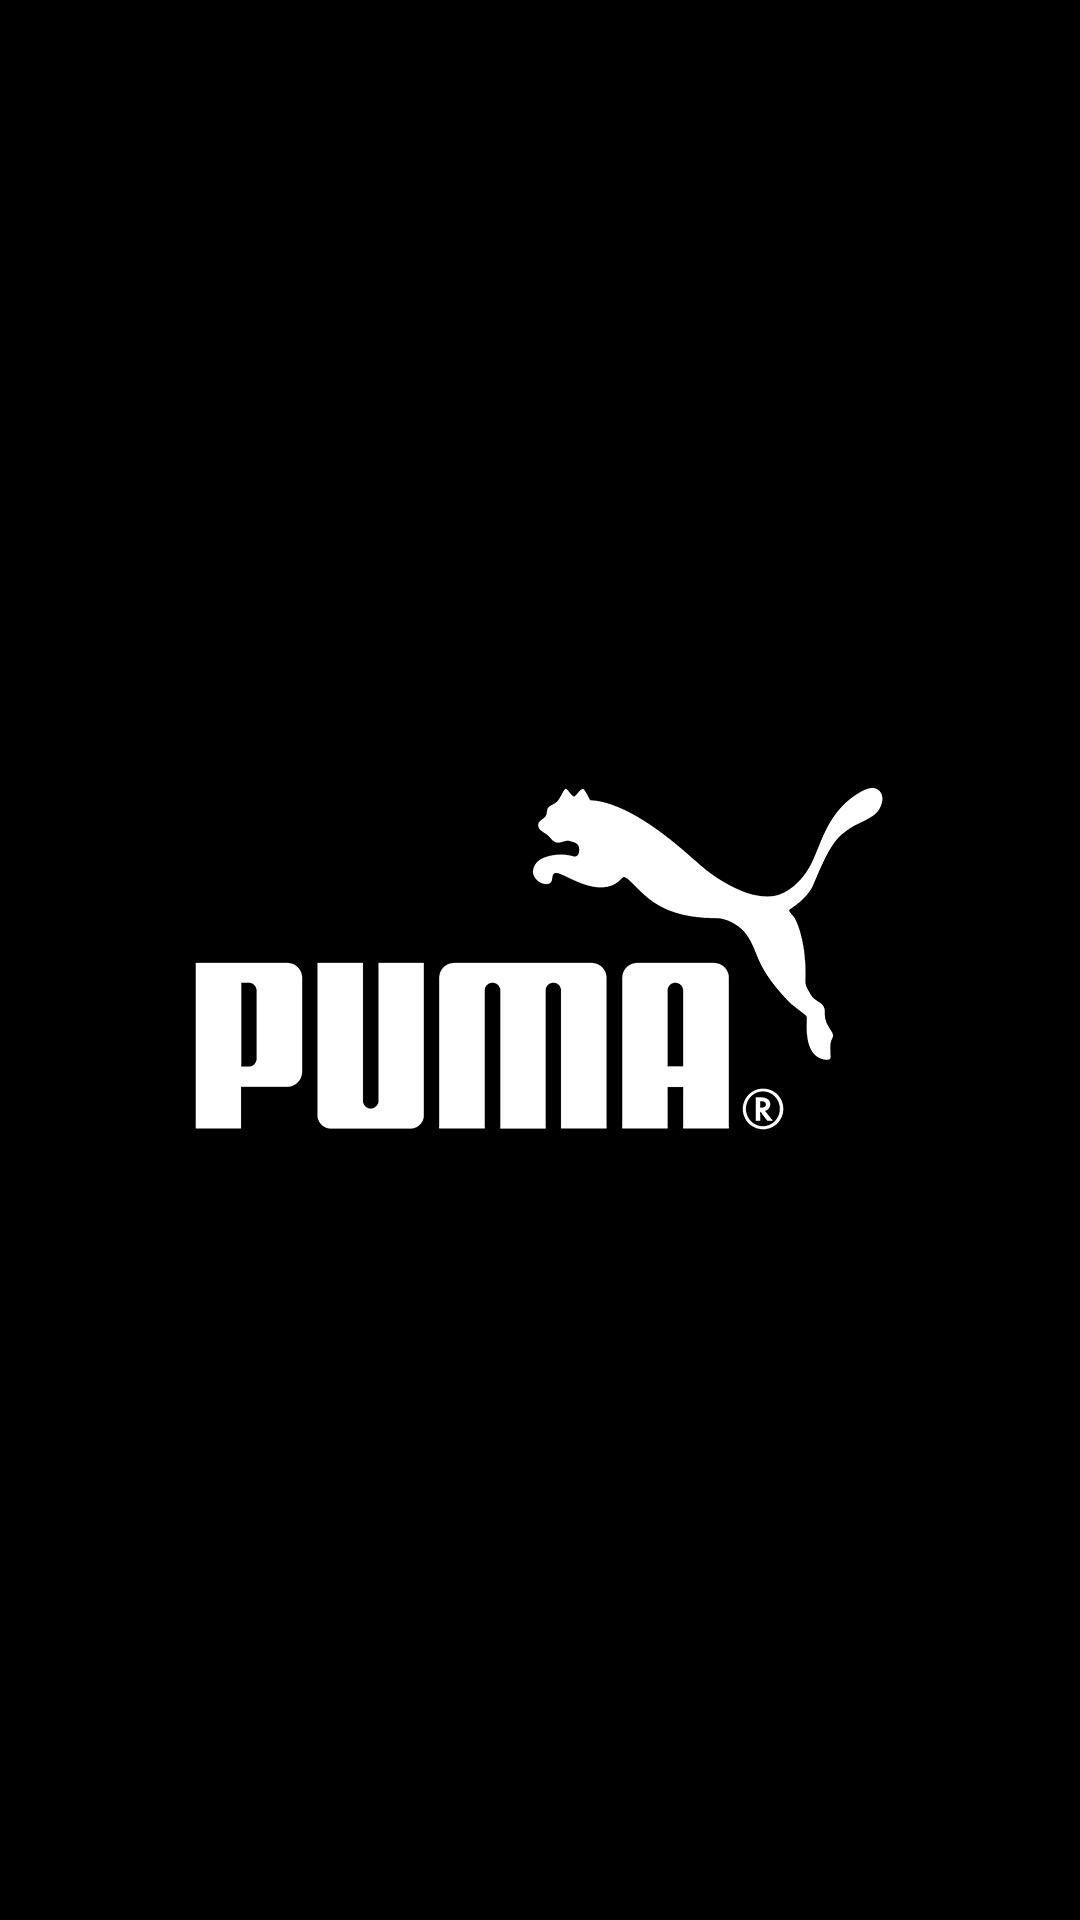 White Puma Logo - Pin by Samantha Keller on PUMA | Pinterest | Logos, Black wallpaper ...